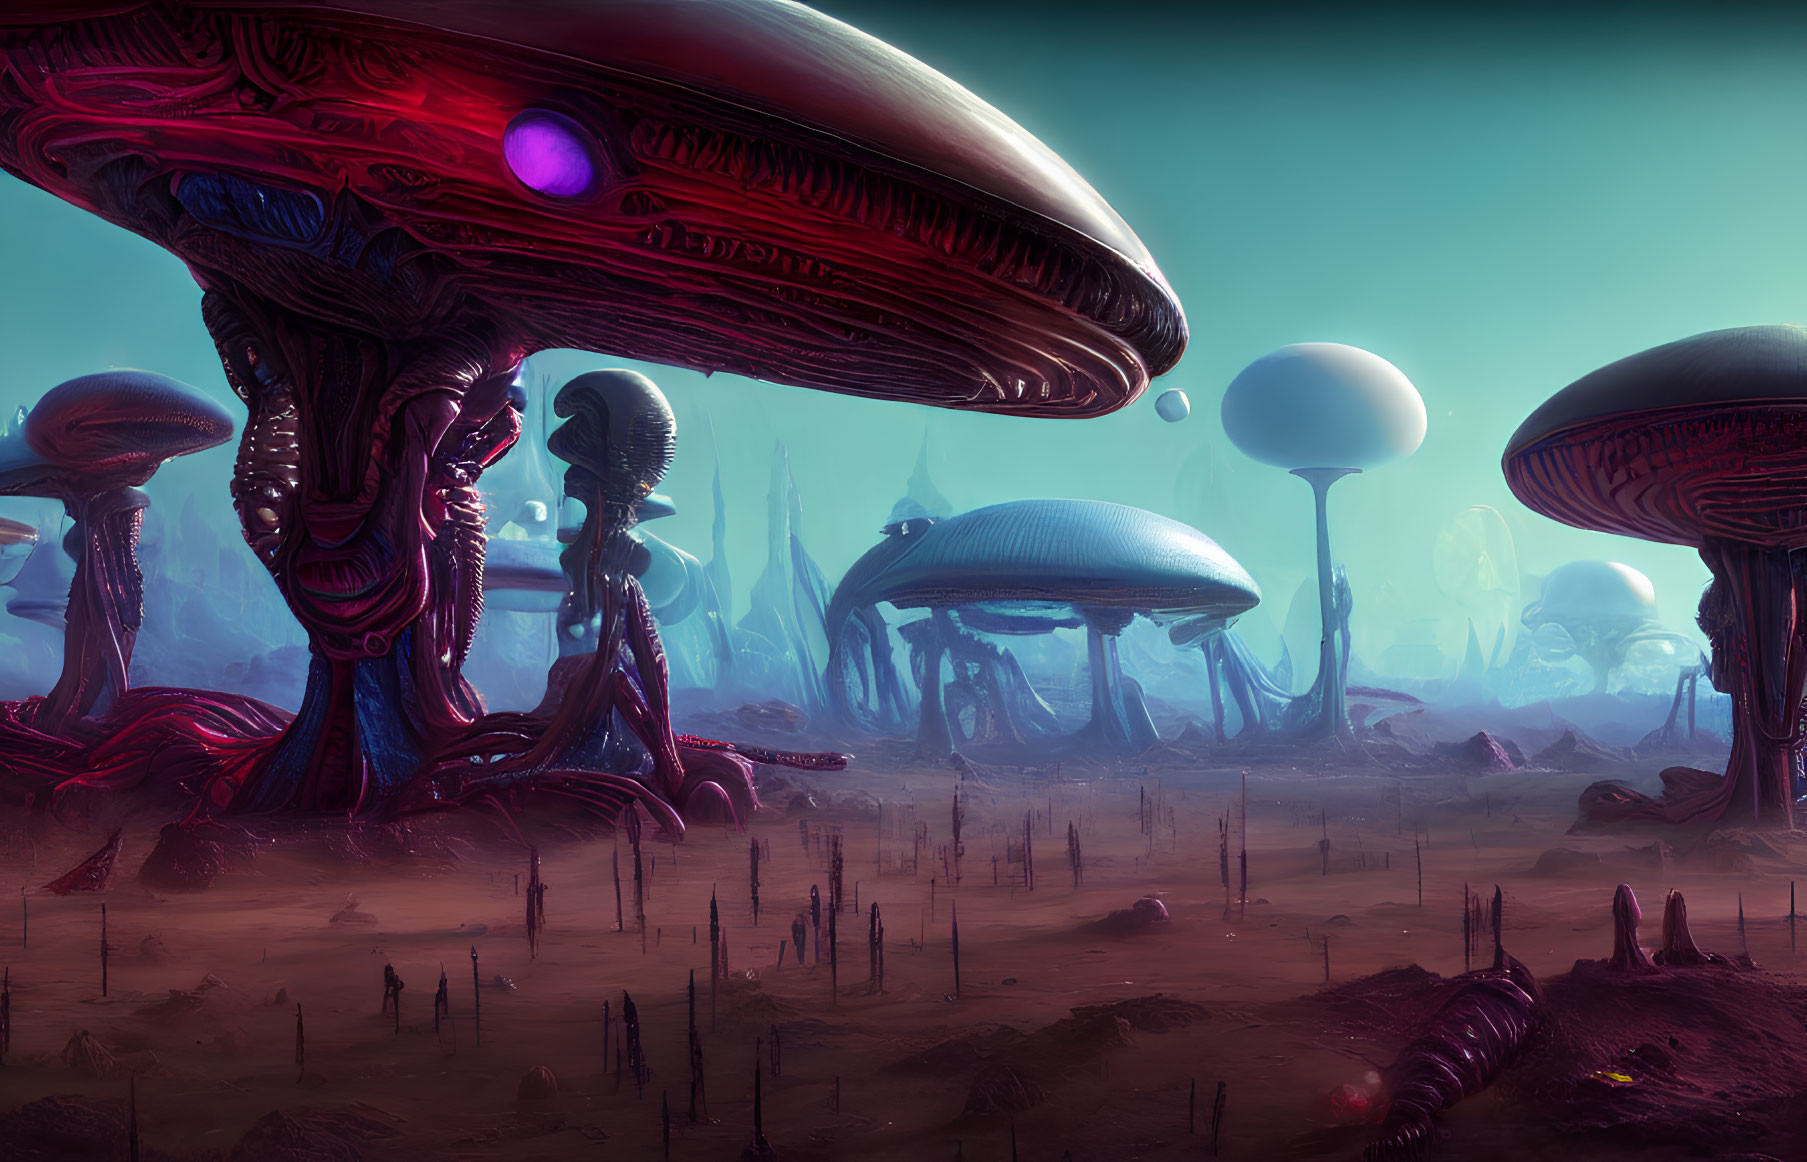 Surreal alien landscape with towering mushroom-like structures under hazy sky